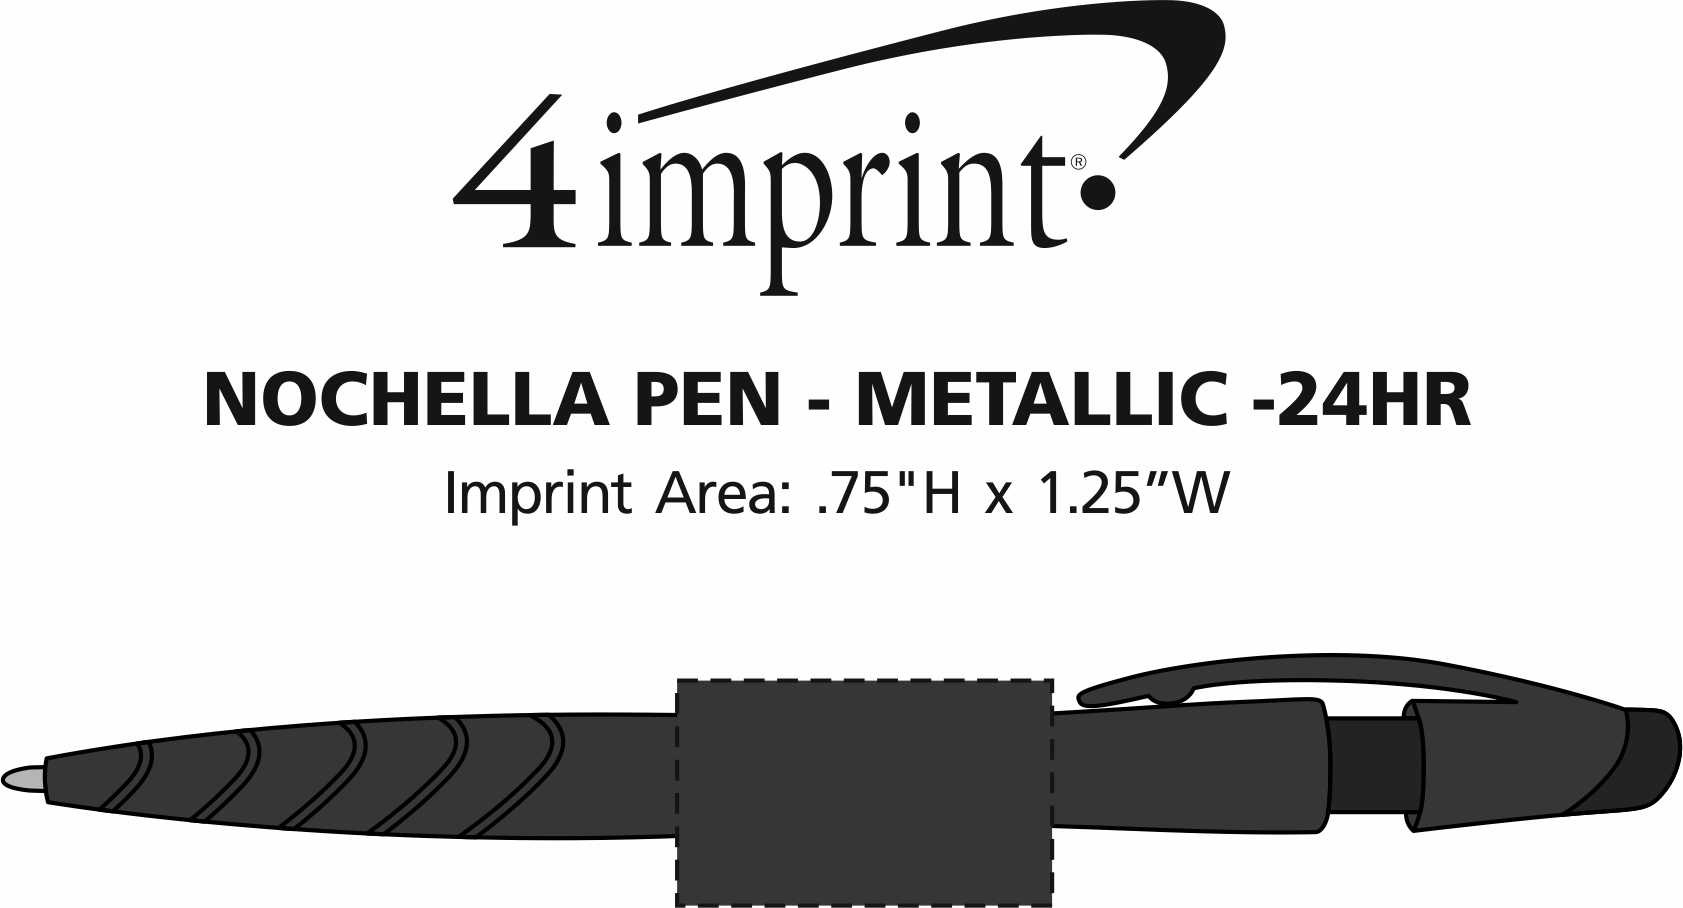 Imprint Area of Nochella Pen - Metallic - 24 hr